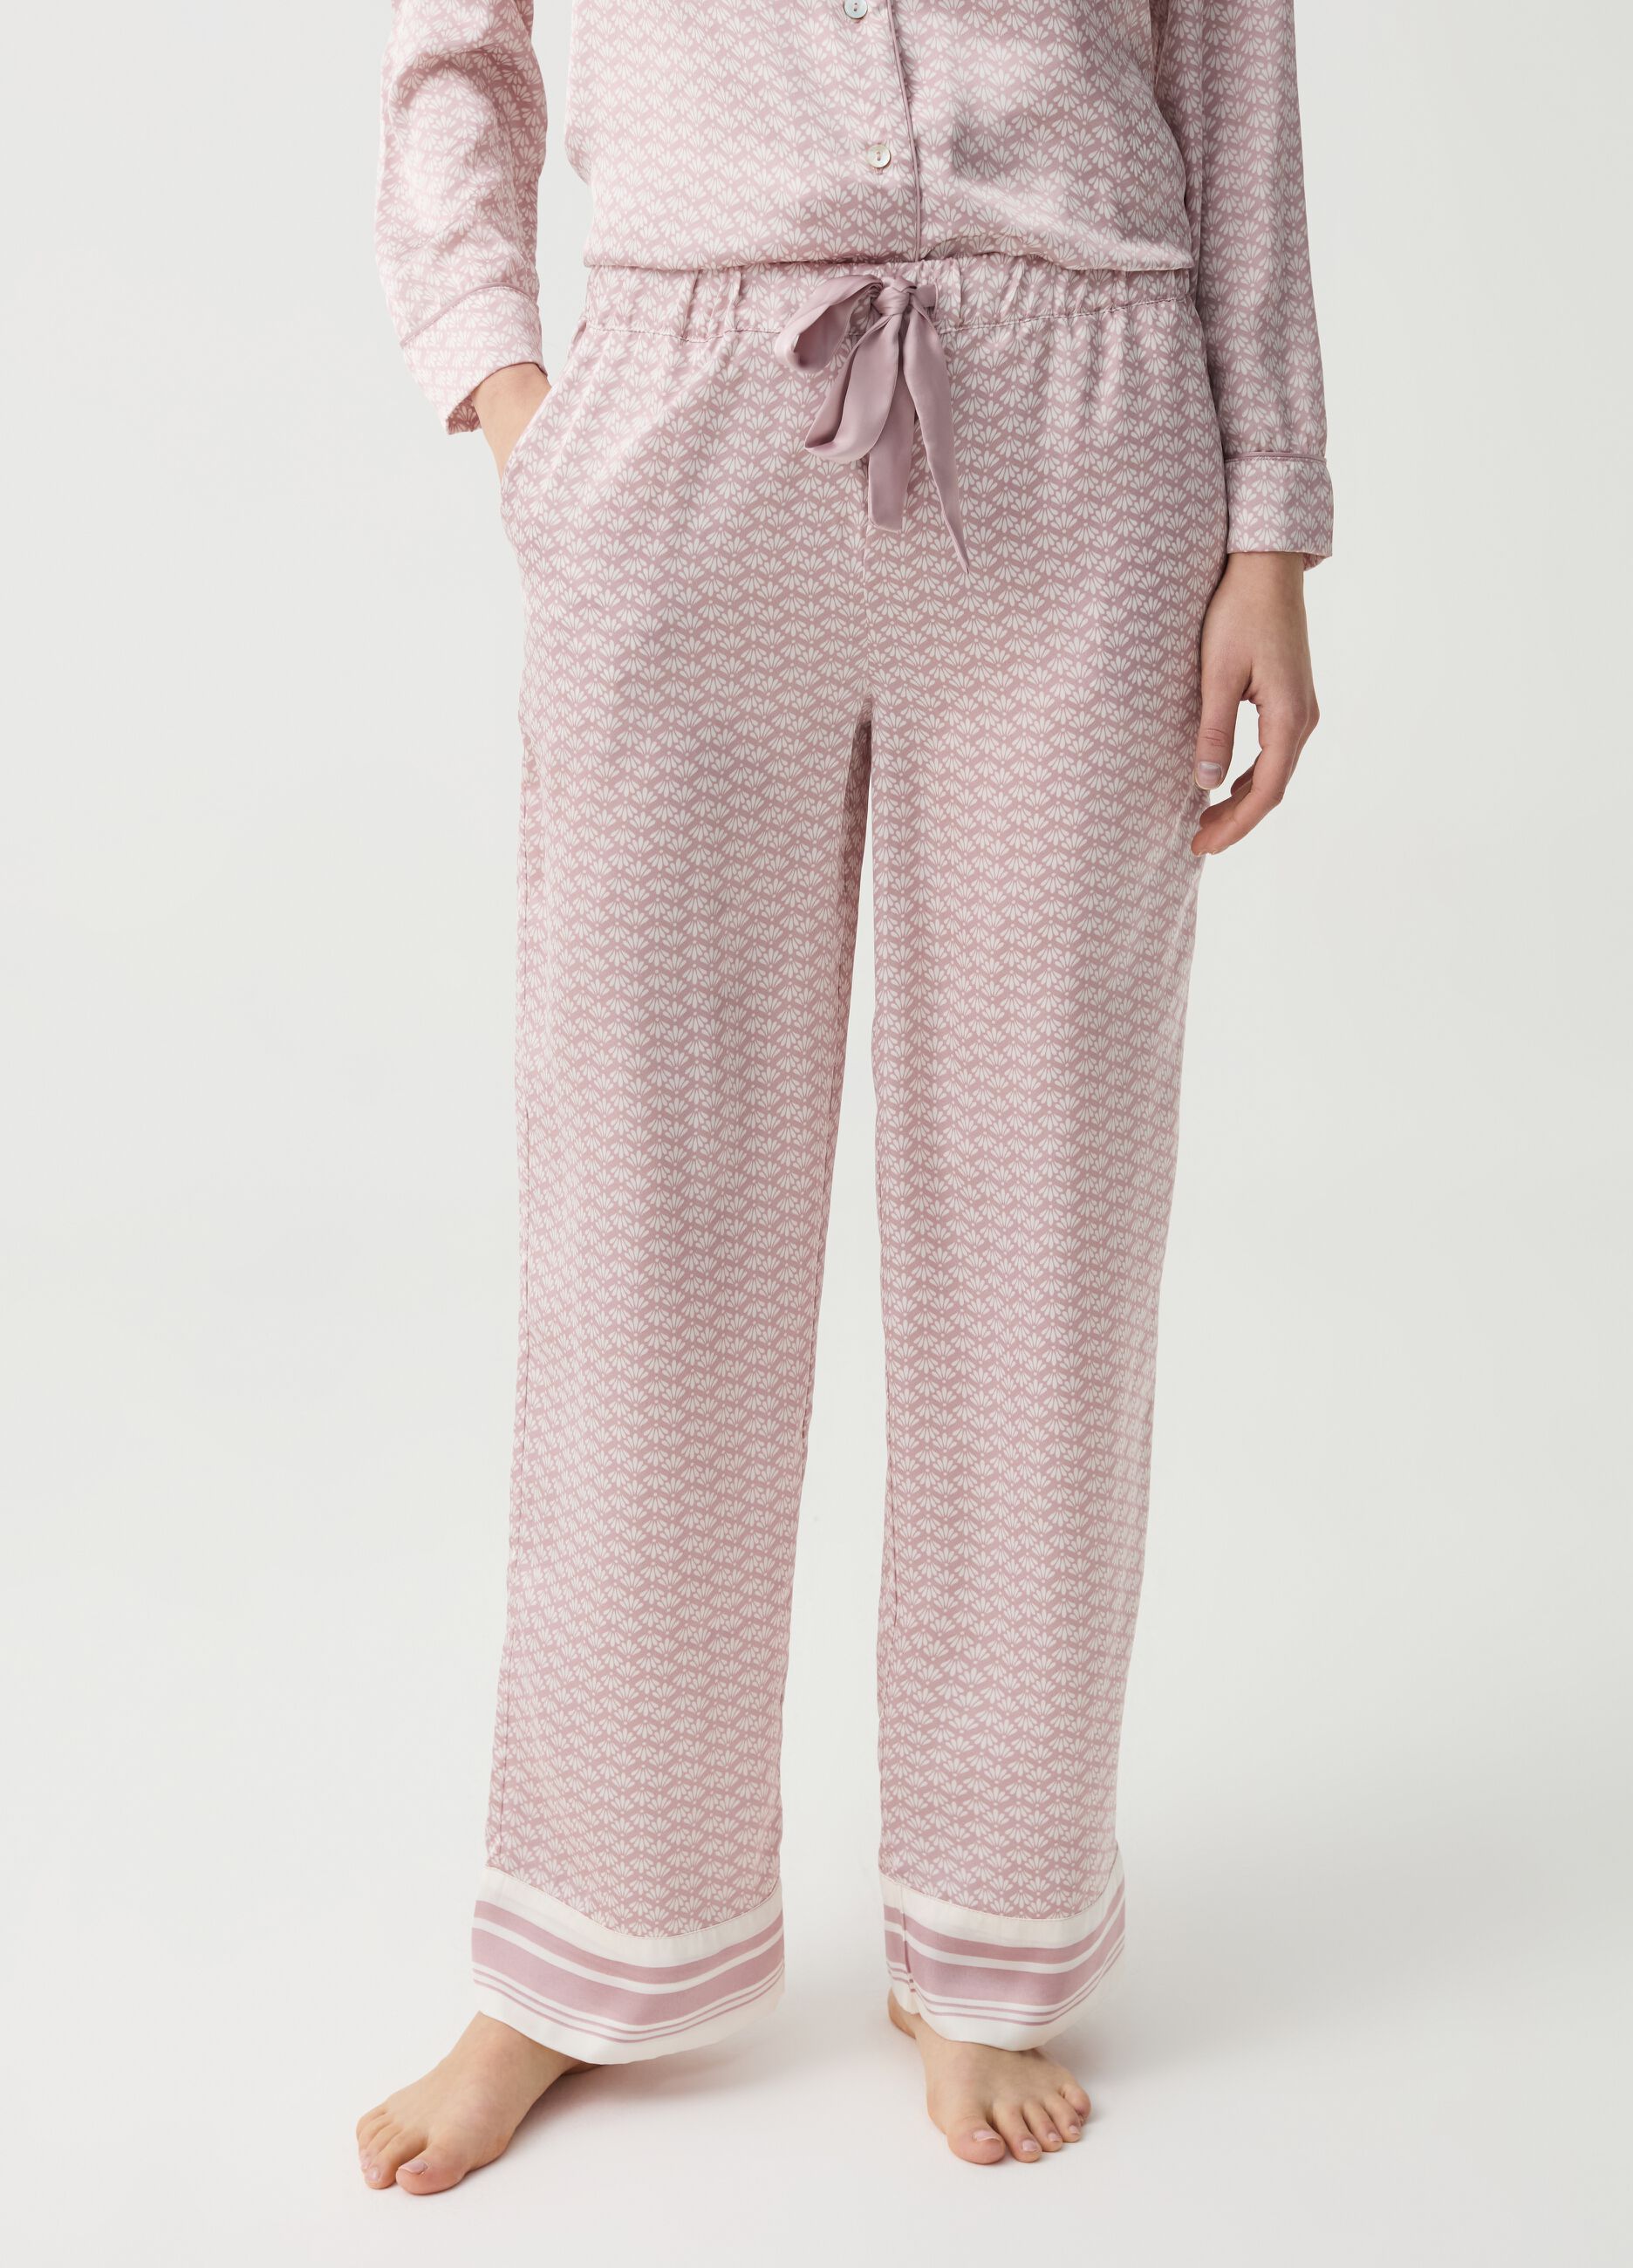 Satin pyjama trousers with pattern